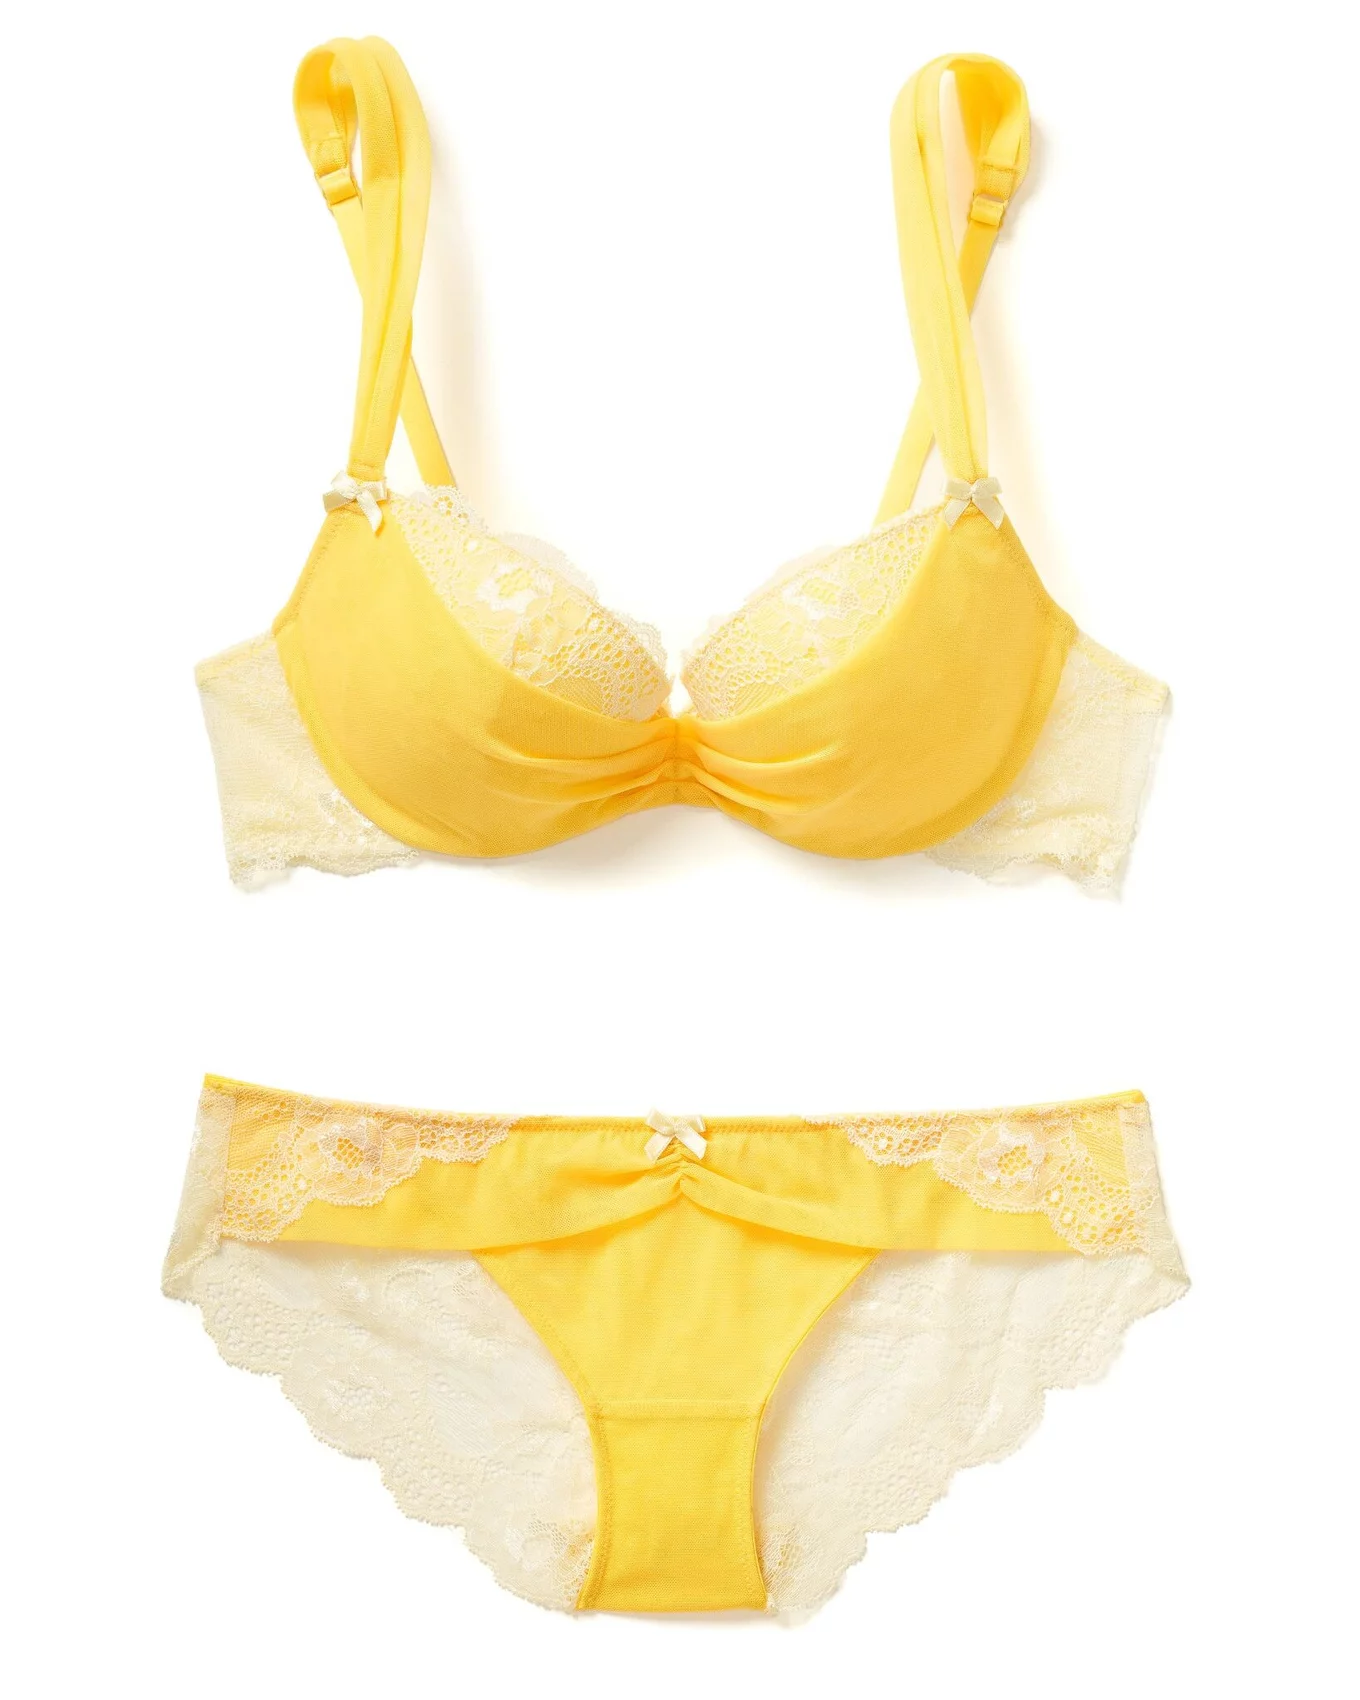 Buy Women's Bras Yellow Push Up Lingerie Online